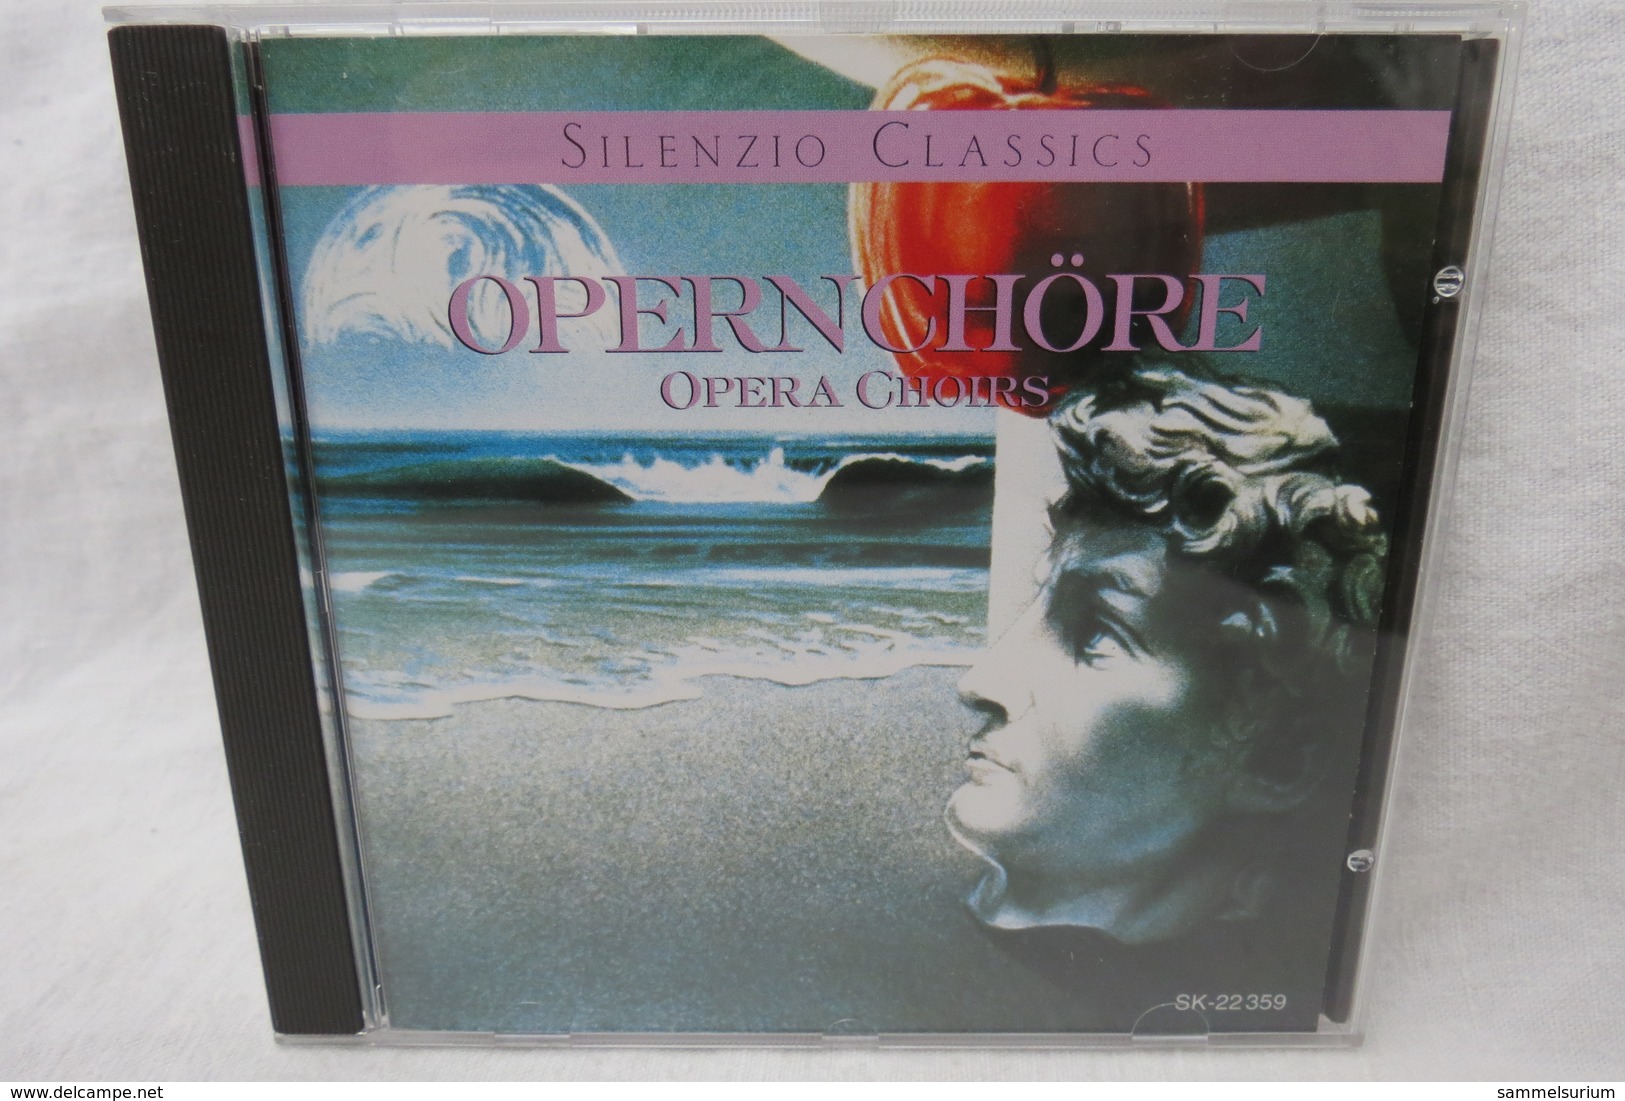 CD "Silenzio Classics" Opernchöre - Oper & Operette